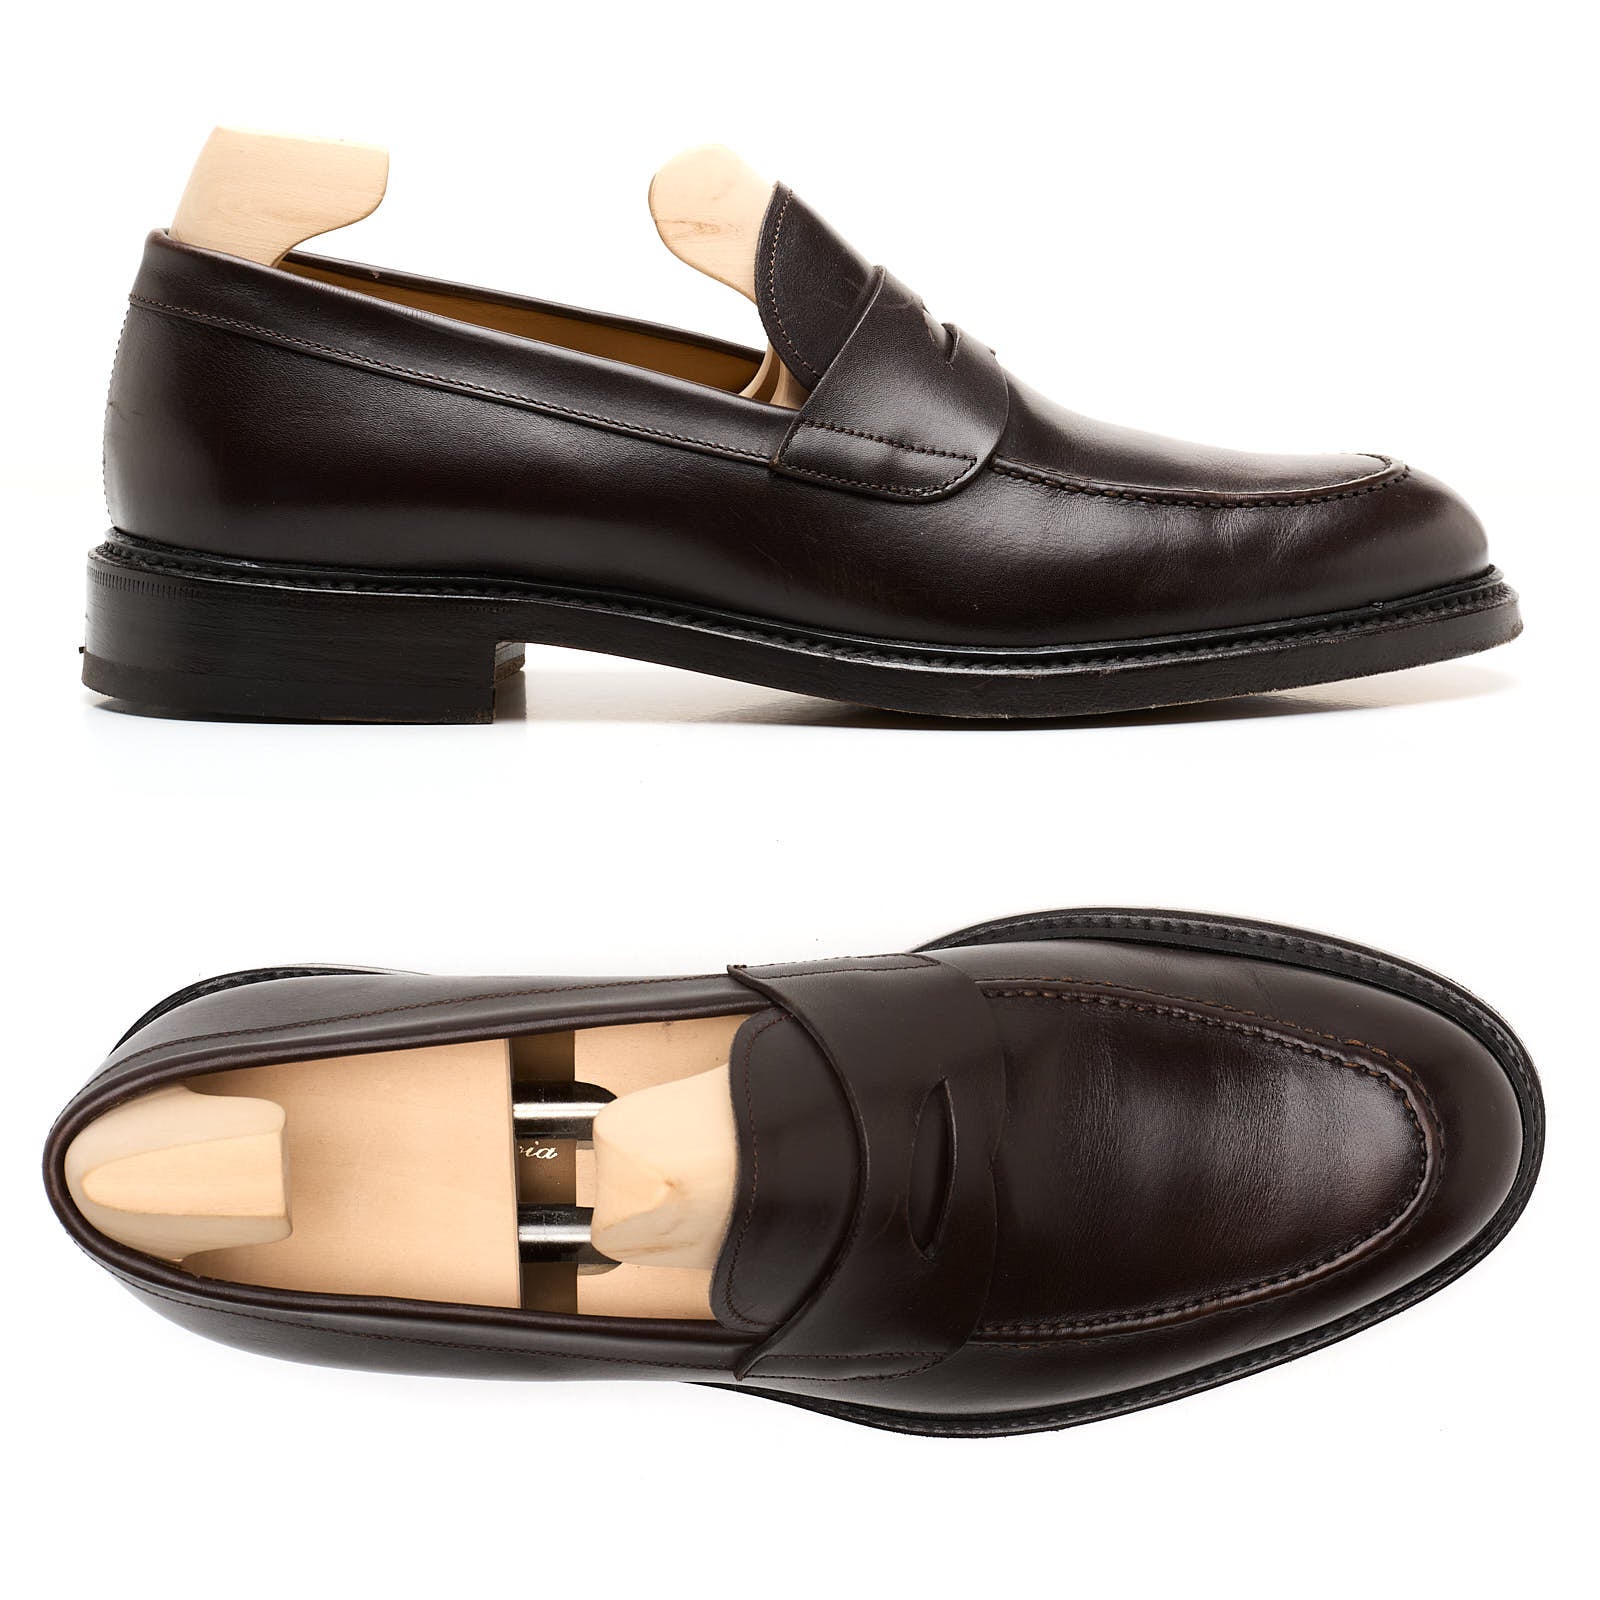 STIVALERIA SAVOIA Dark Brown Calfskin Leather Penny Loafer Dress Shoes UK 8 US 8.5